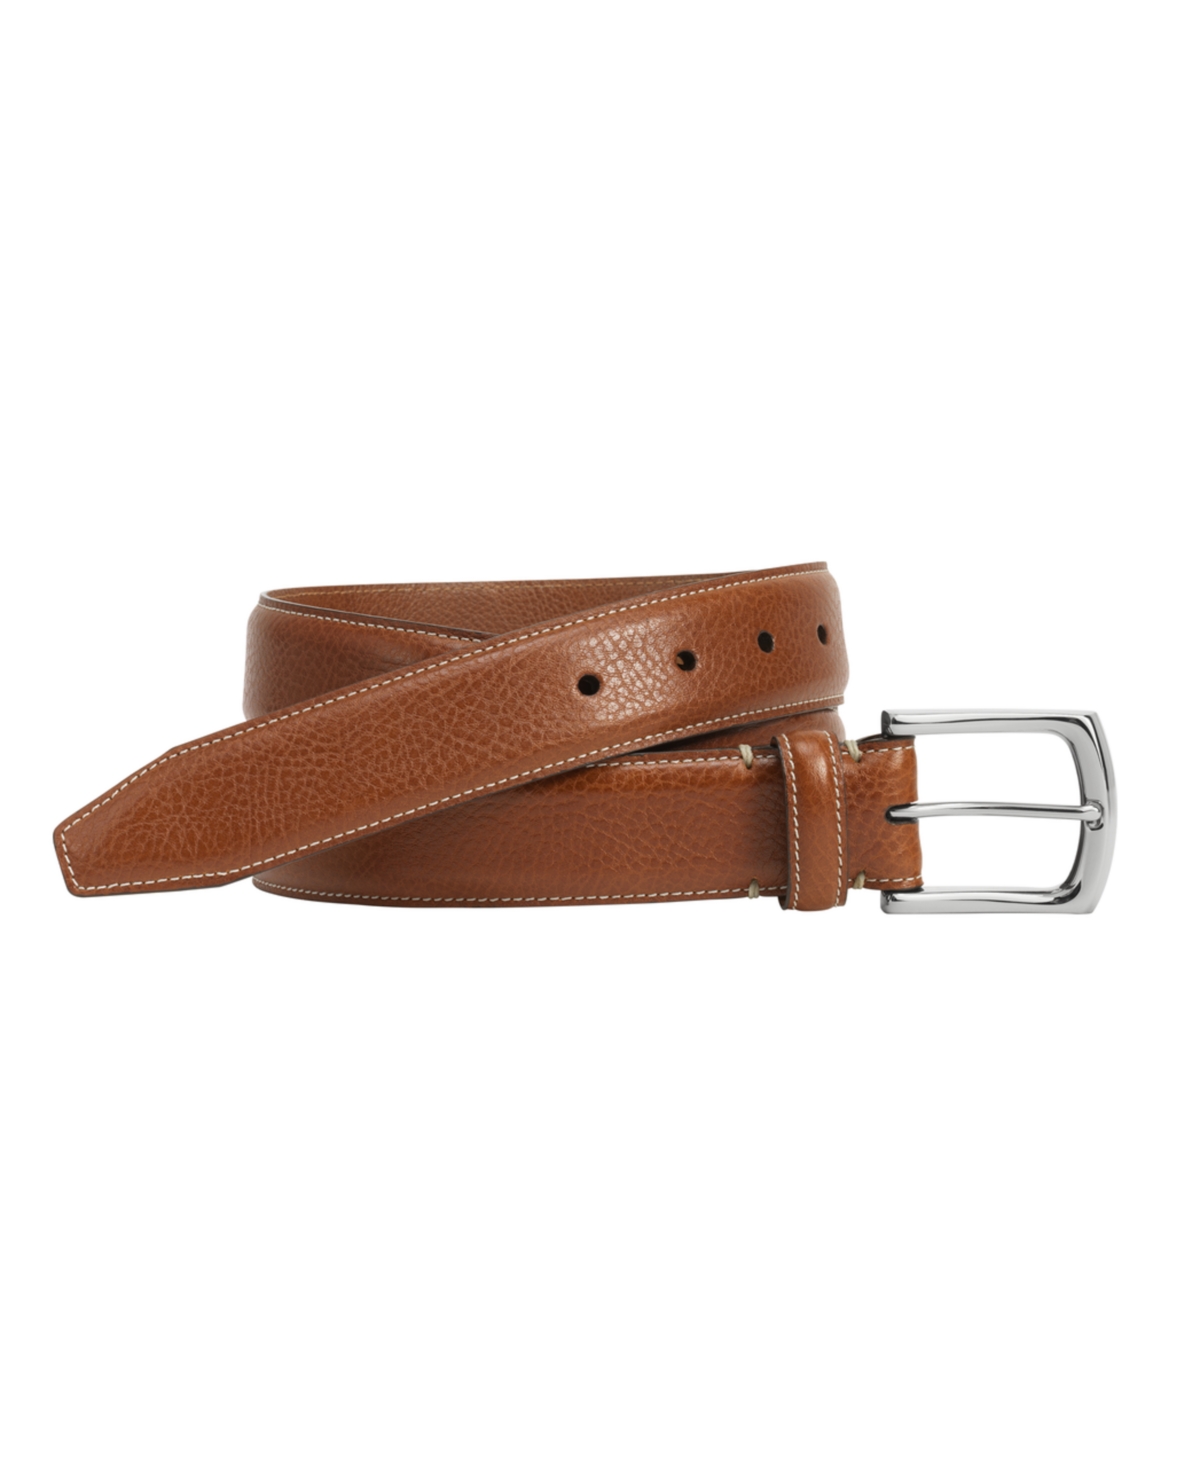 Men's Topstitched Leather Belt - Tan